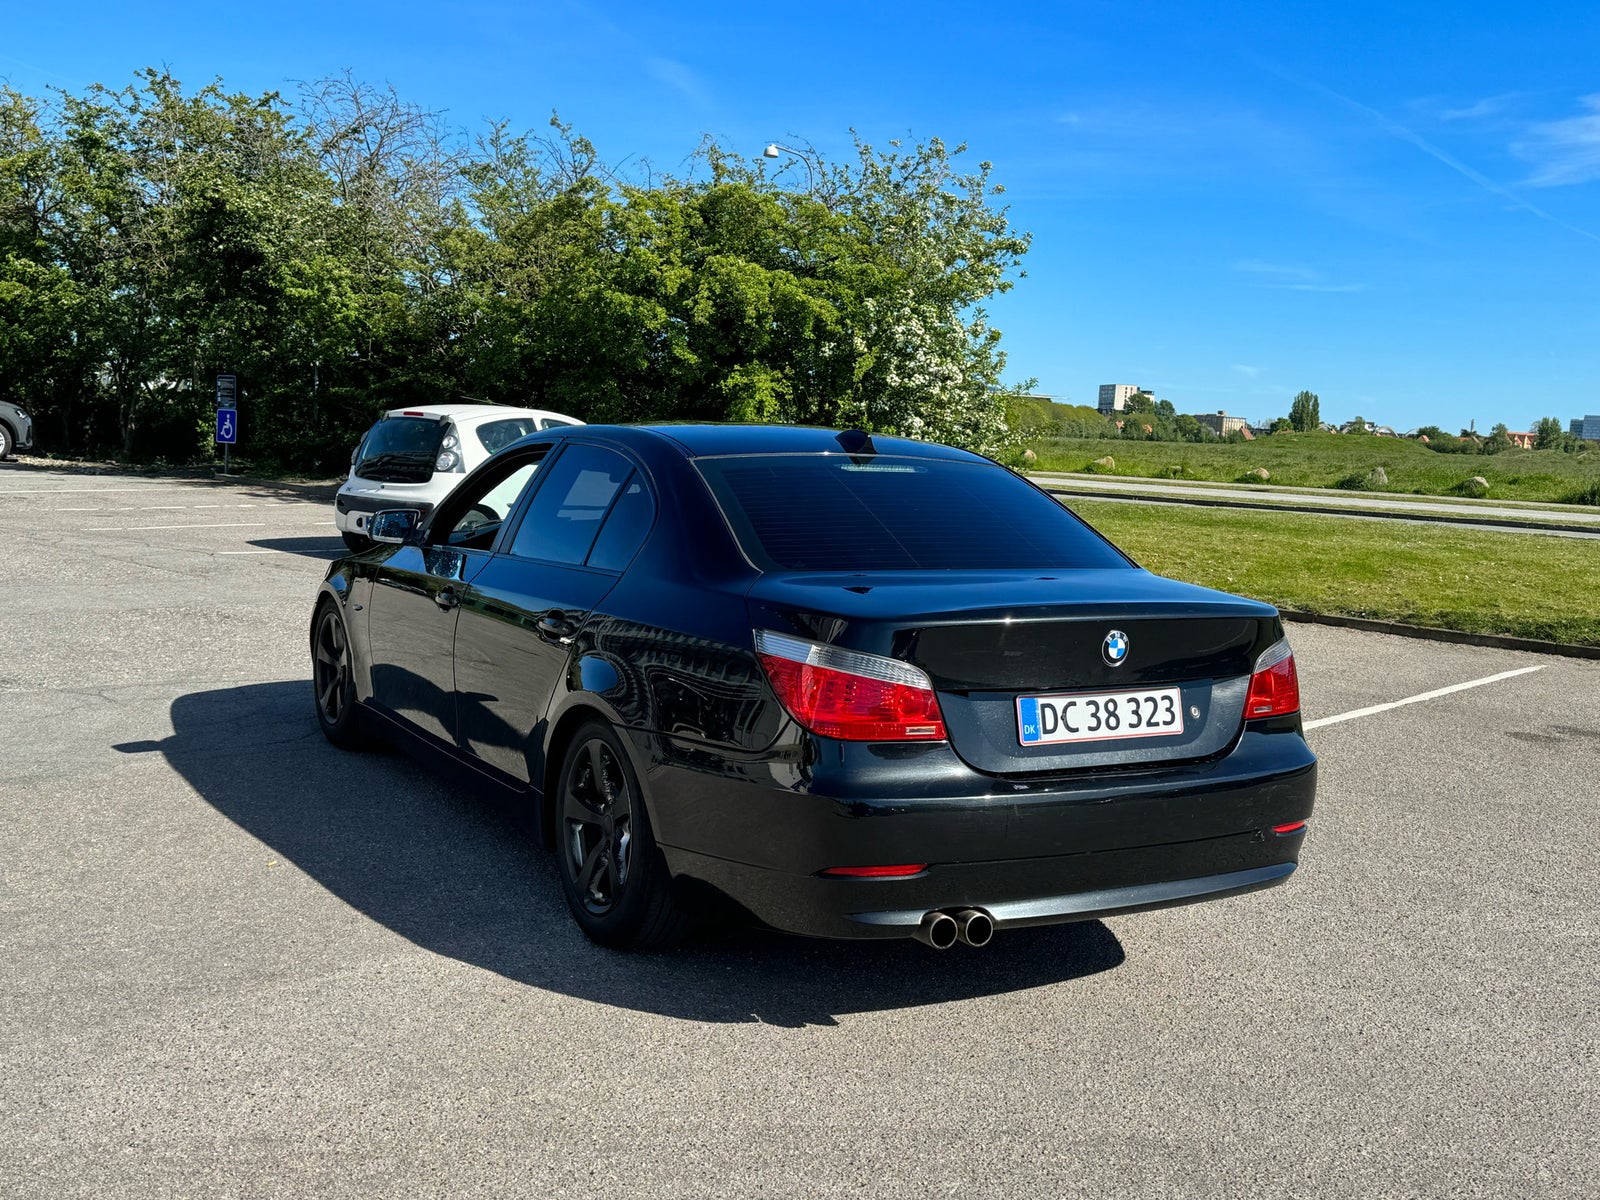 BMW 520i, 2,2 aut., Benzin